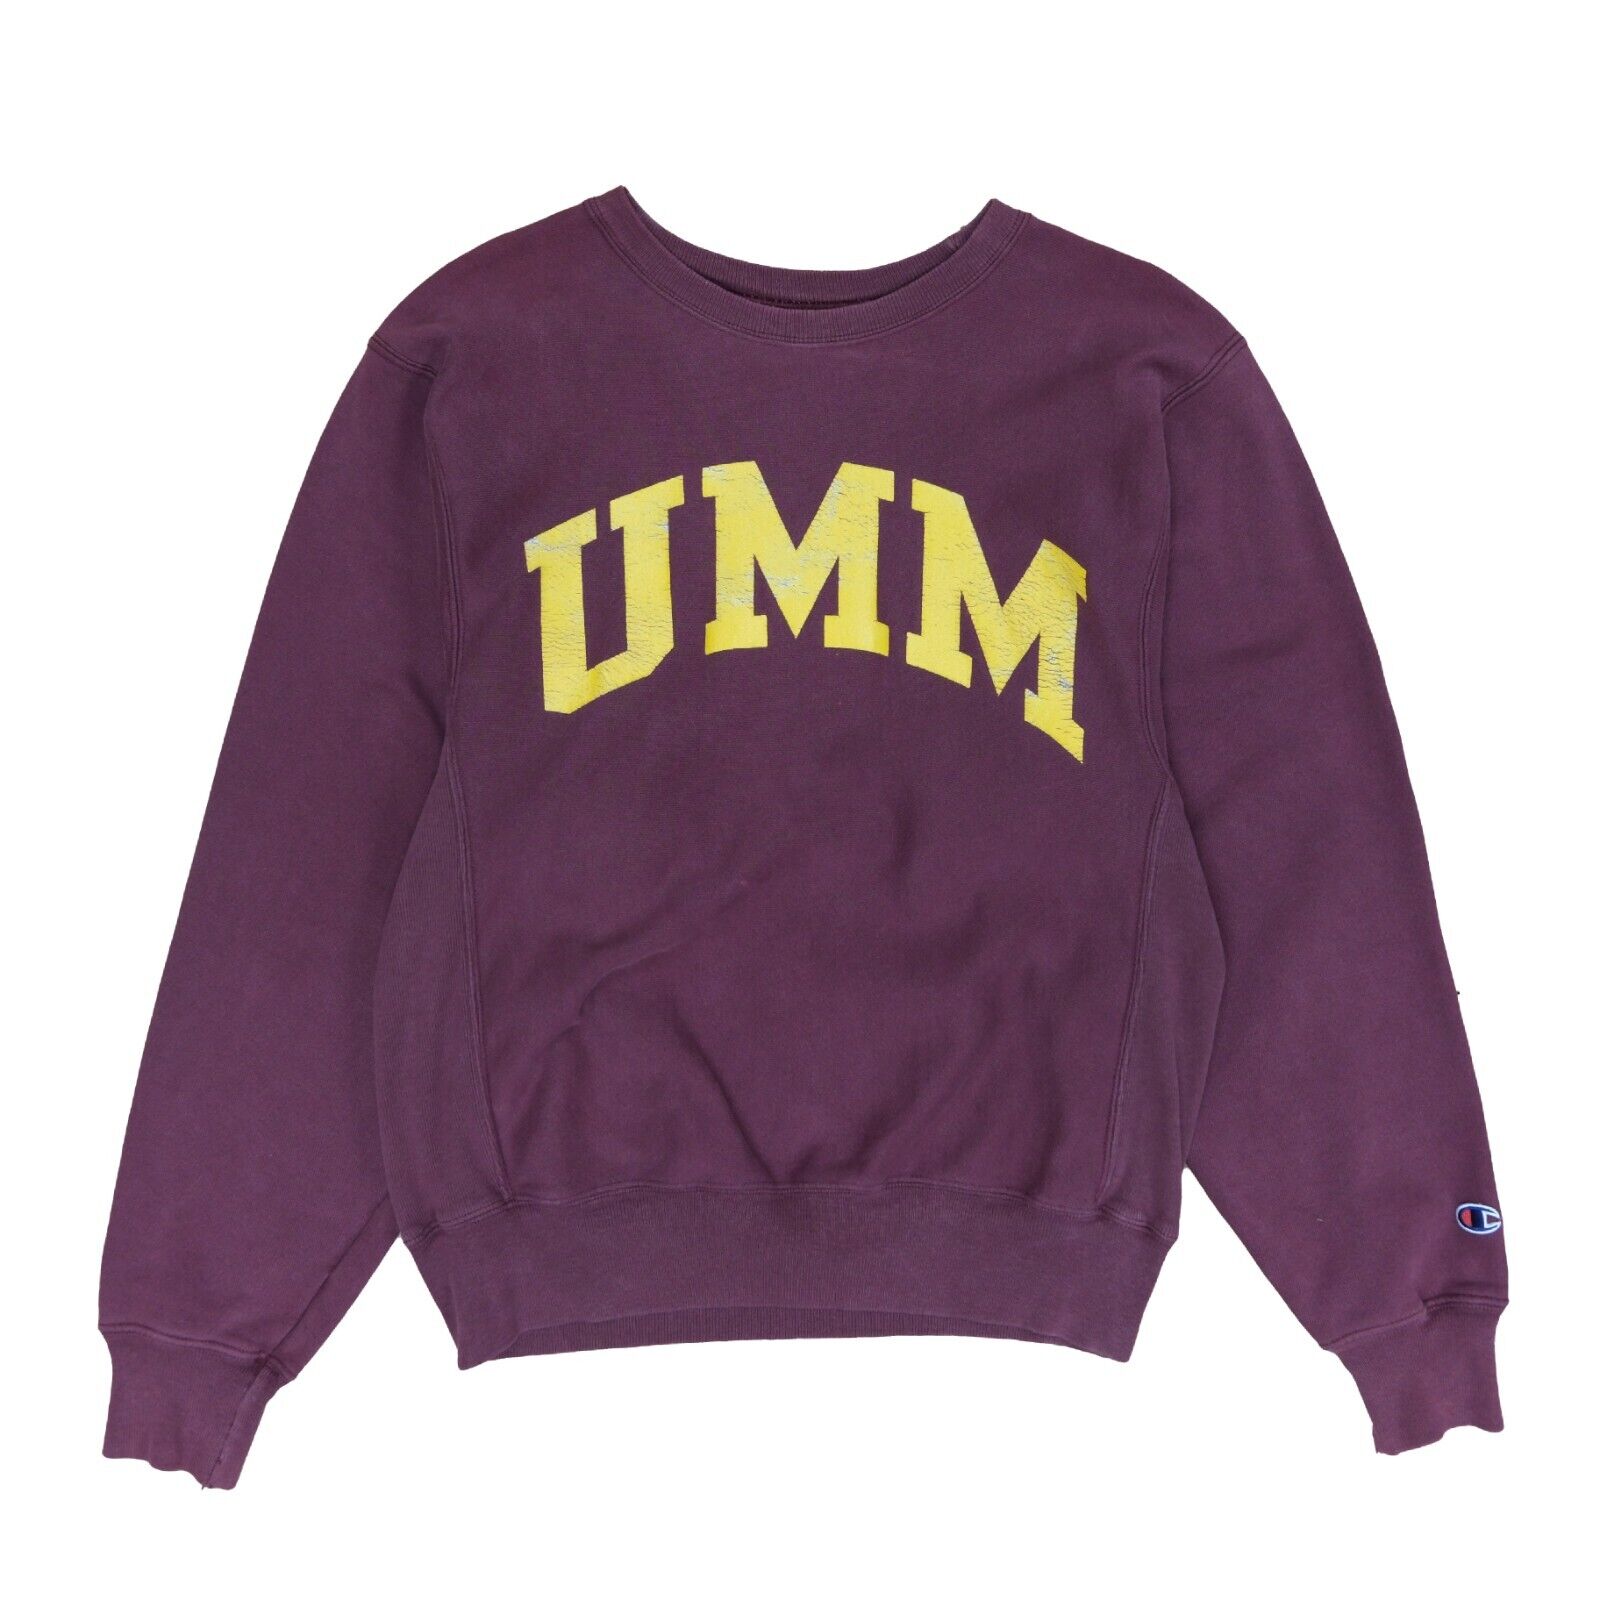 Vintage University of Maine Champion Reverse Weave Sweatshirt Size